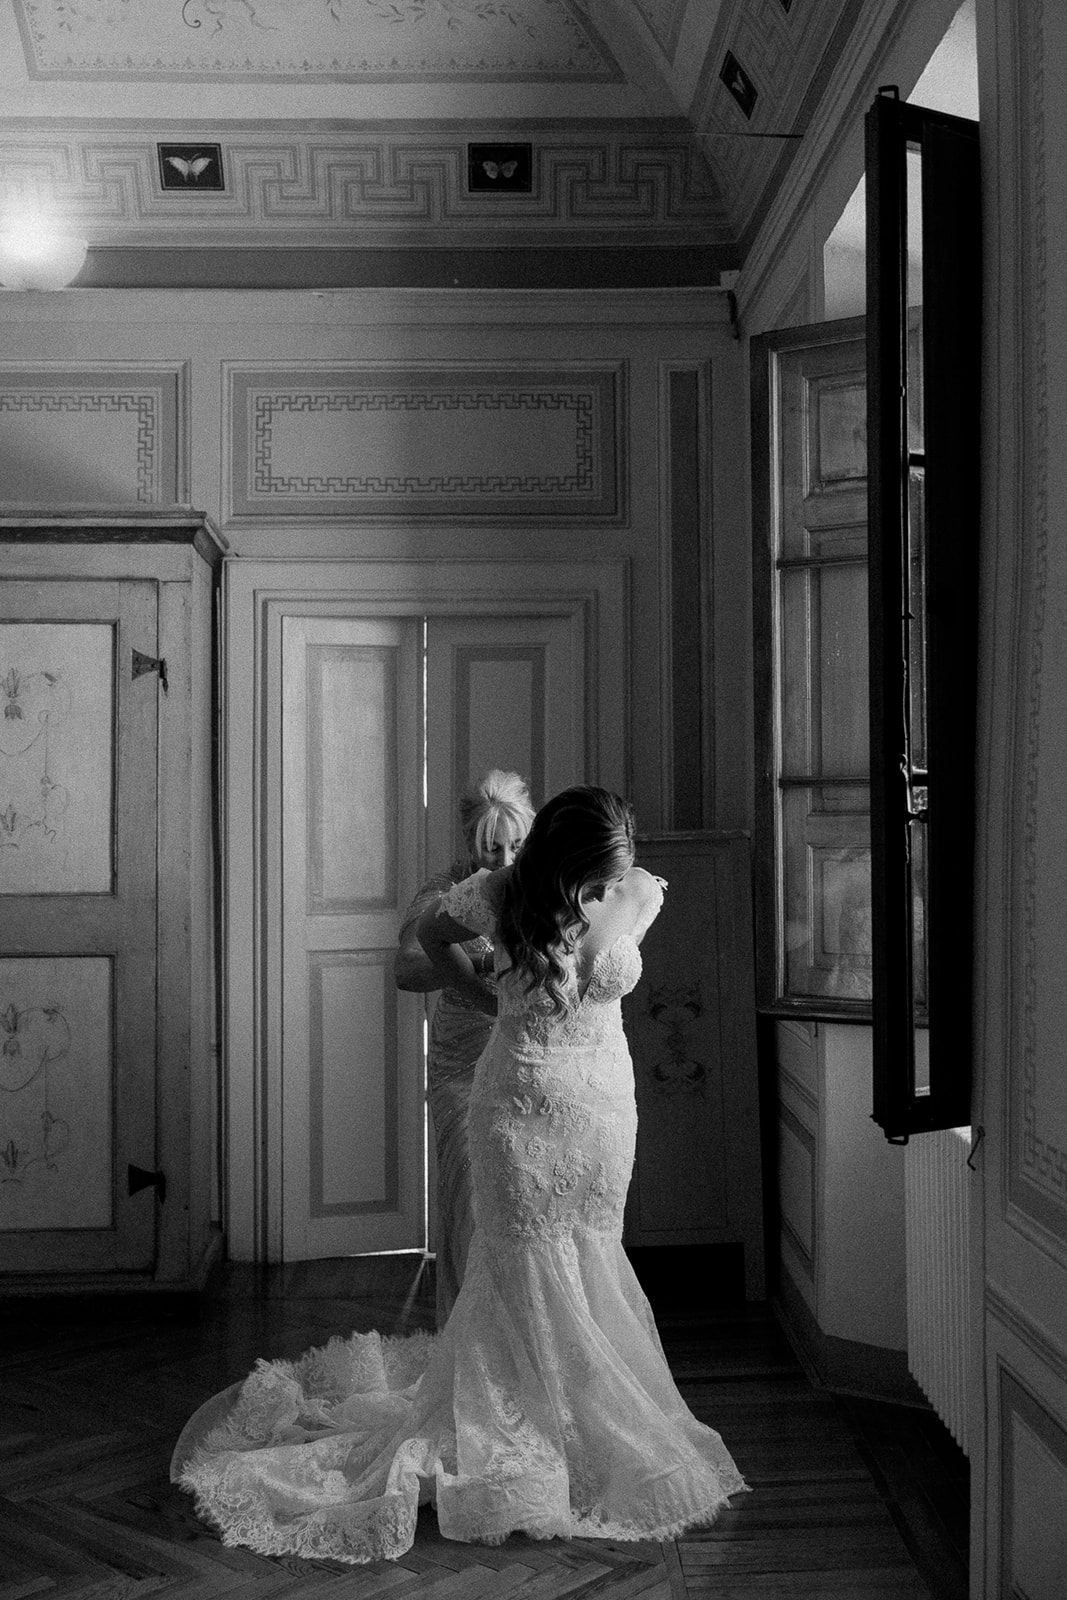 bride puts on wedding dress in window light